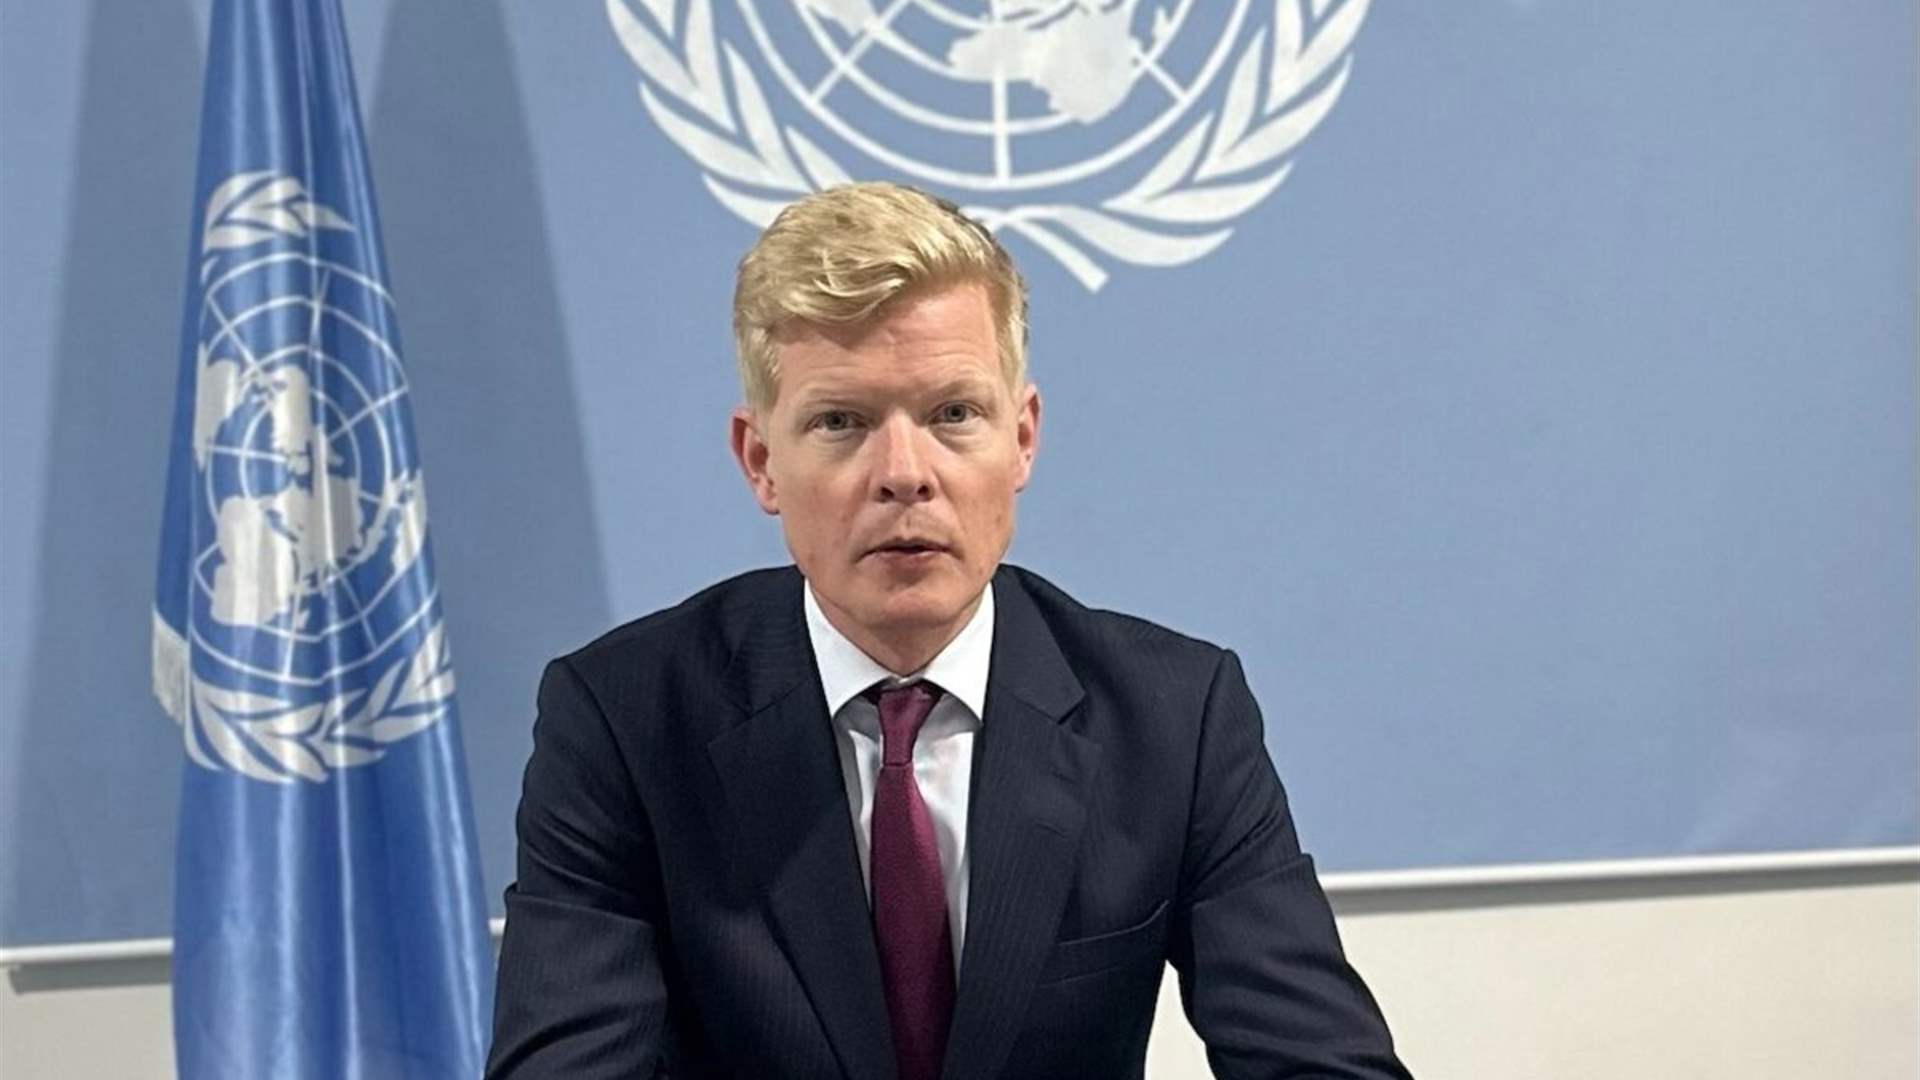 UN envoy urges restraint over Yemen, region &#39;increasingly precarious&#39;